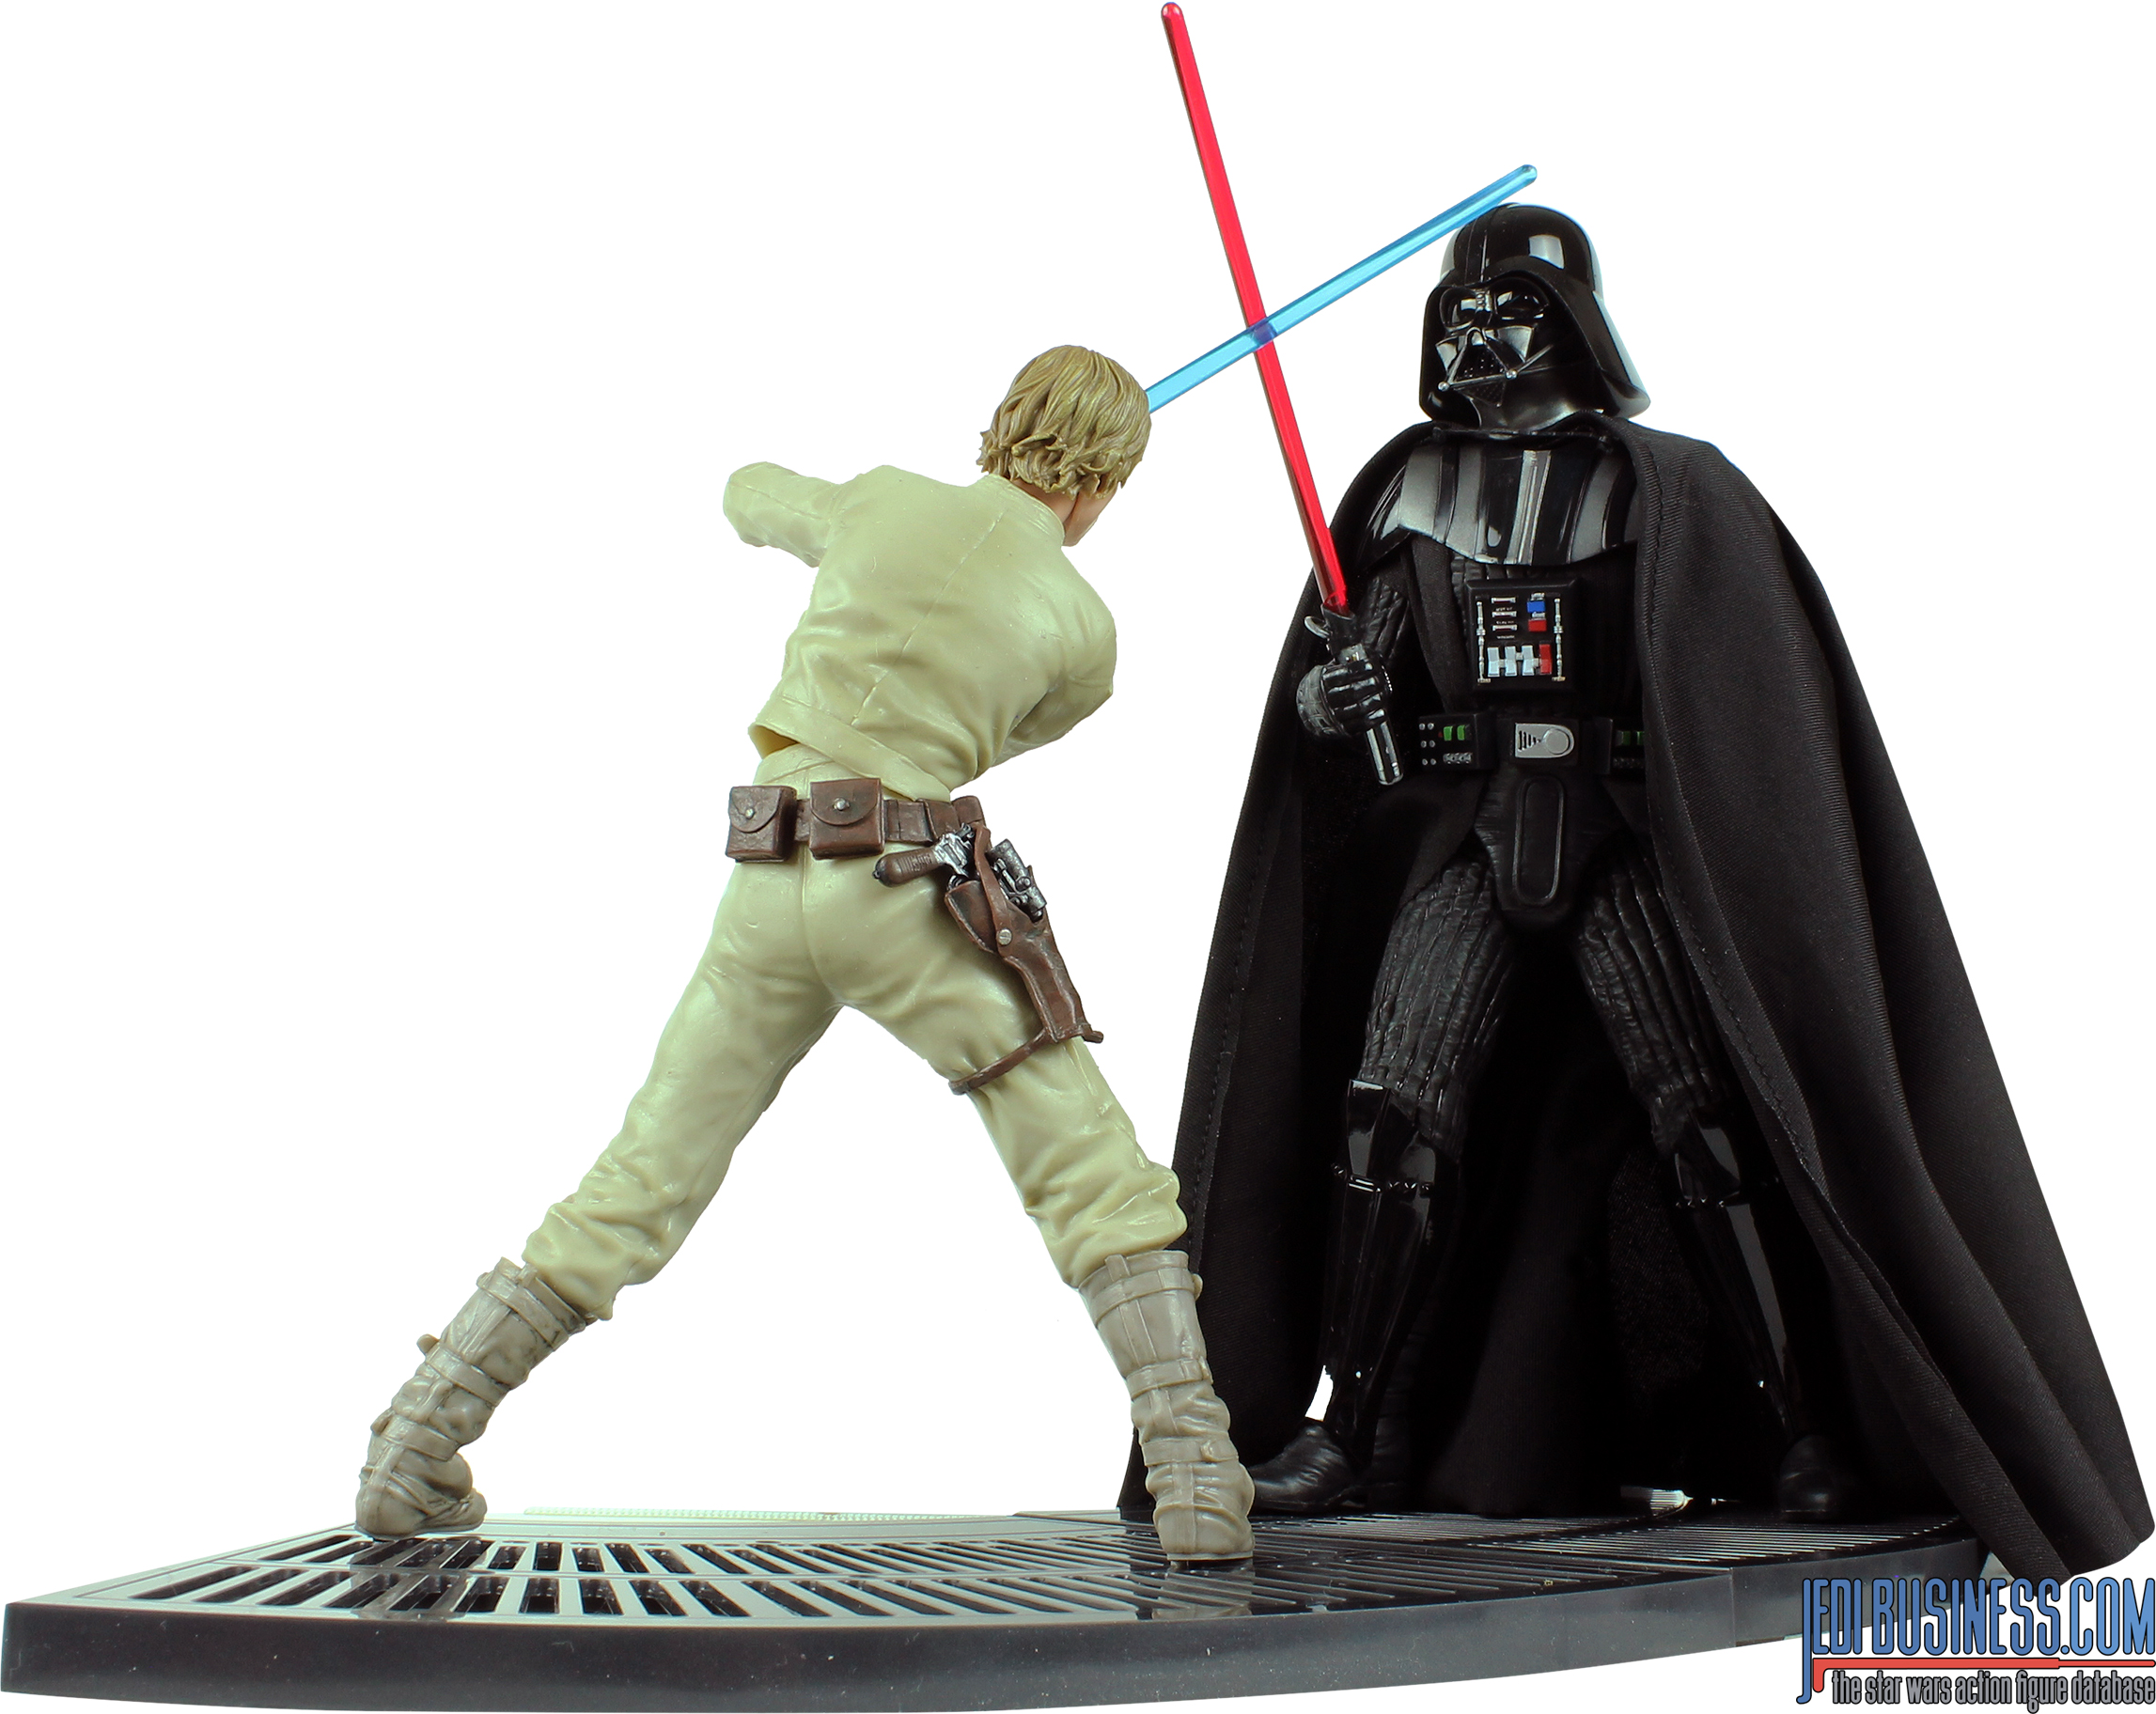 NEU OVP Ungeöff Hasbro STAR WARS The Black Series Luke Skywalker Hyperreal 